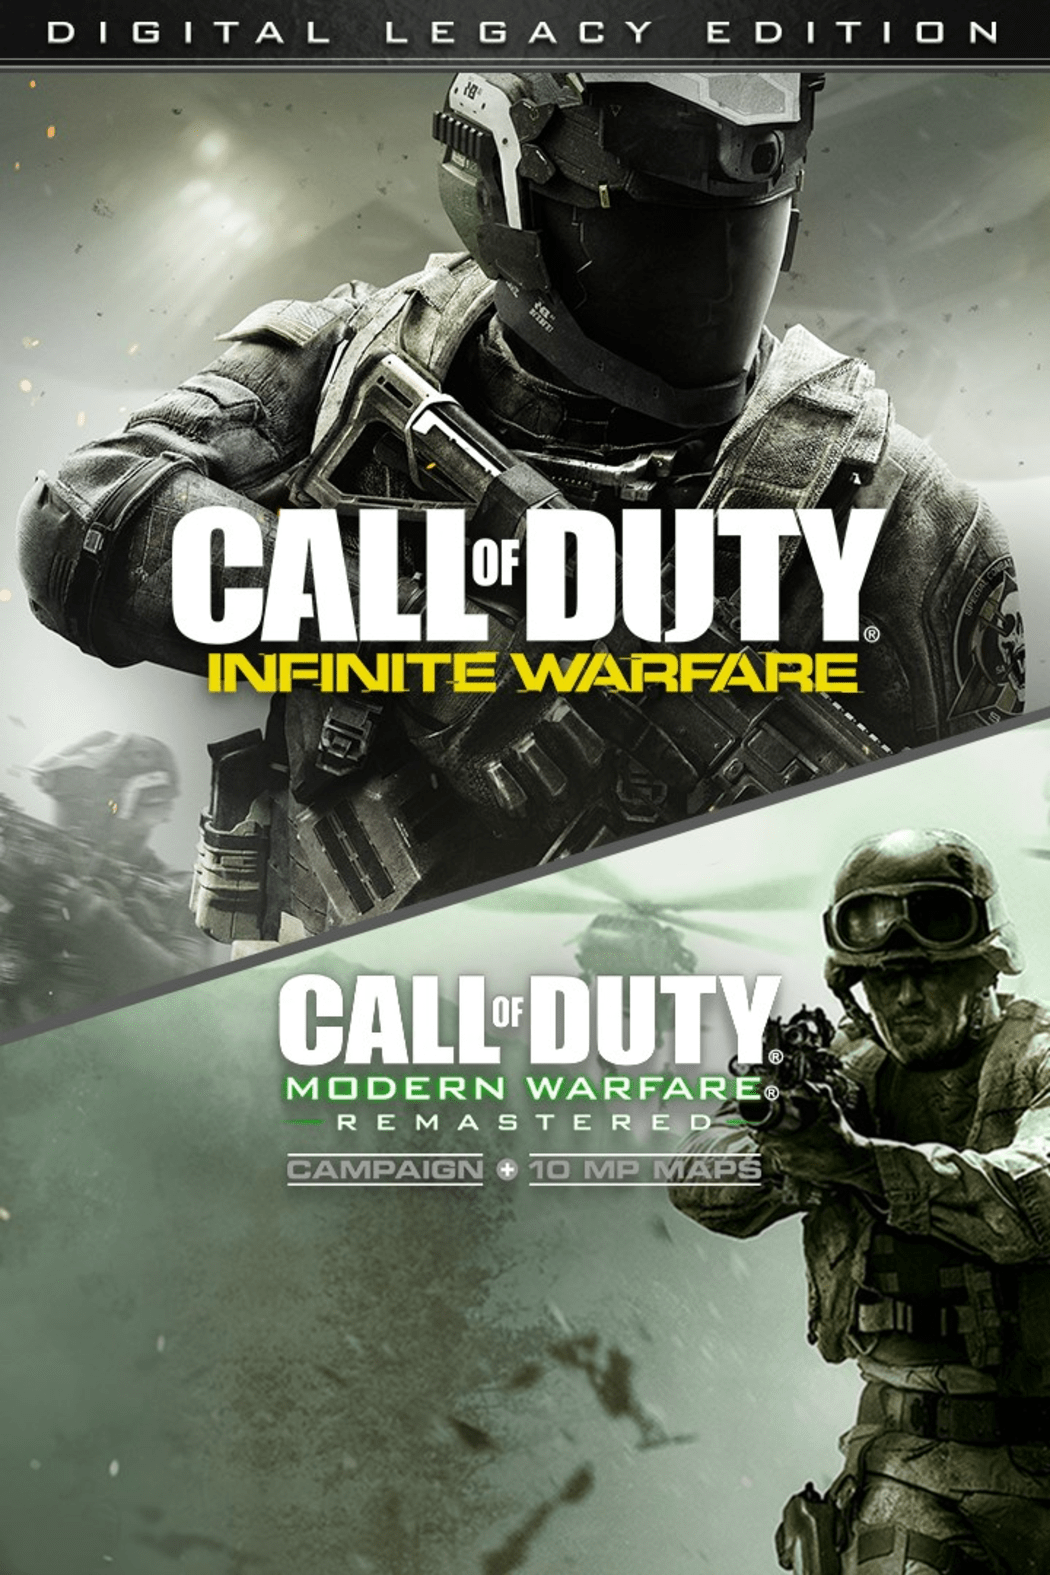 Call of Duty: Infinite Warfare and Modern Warfare Remastered